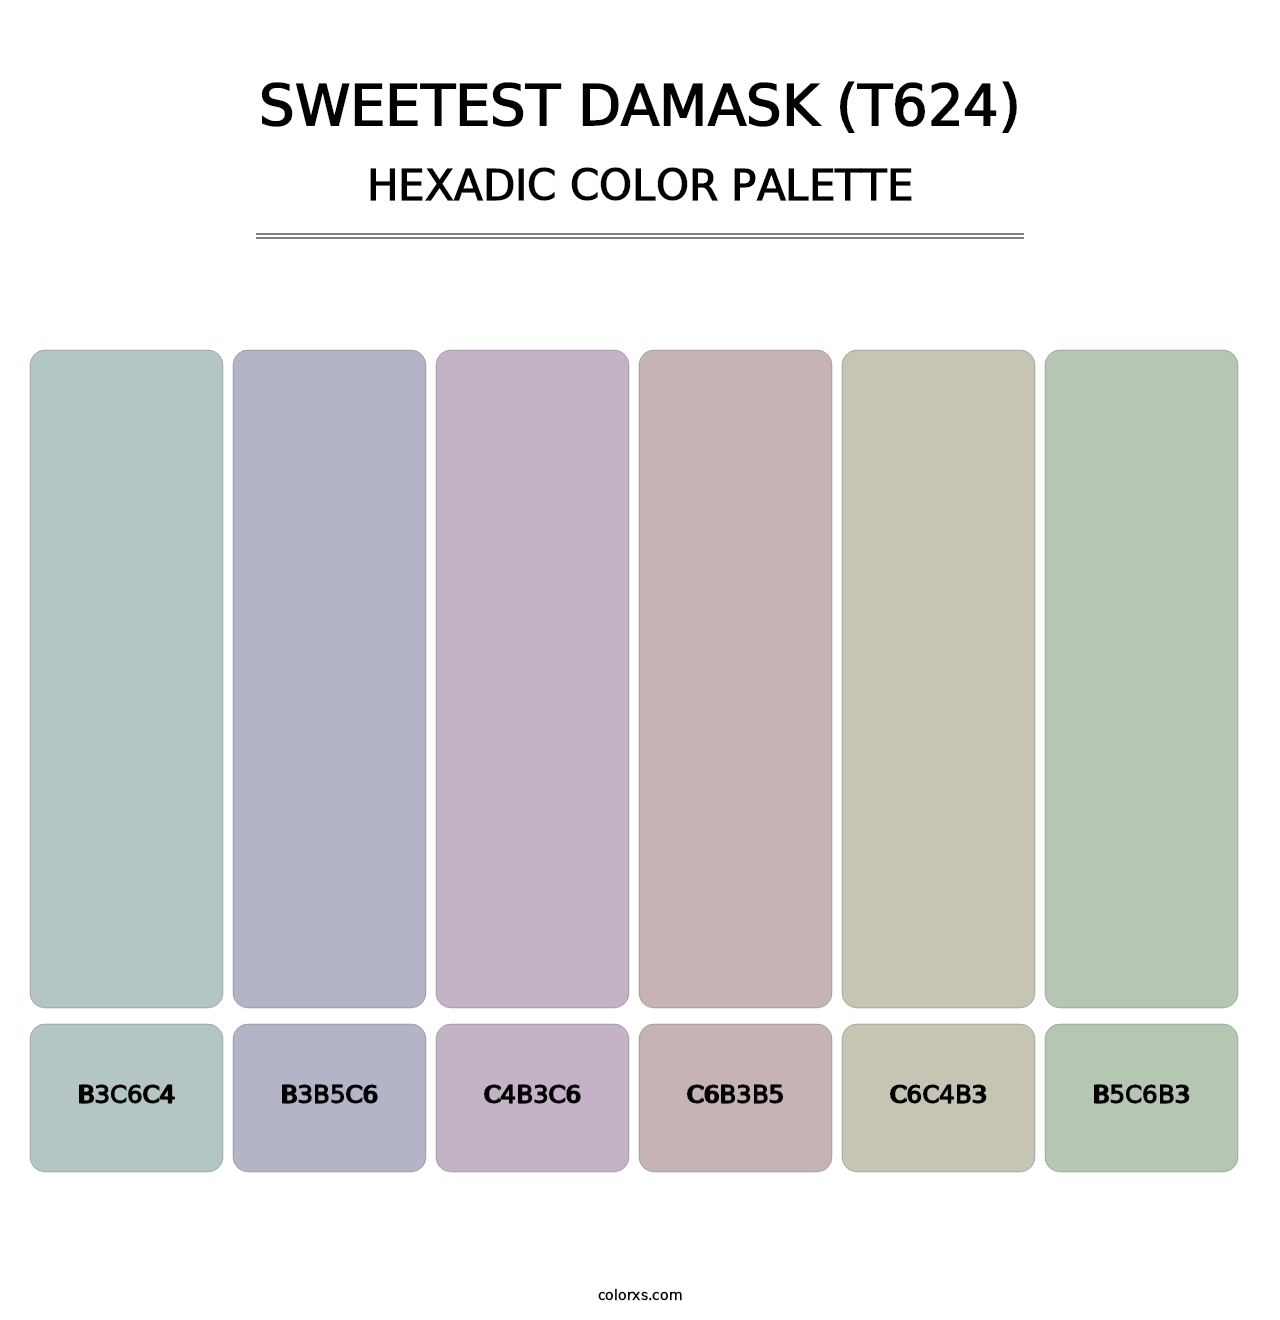 Sweetest Damask (T624) - Hexadic Color Palette